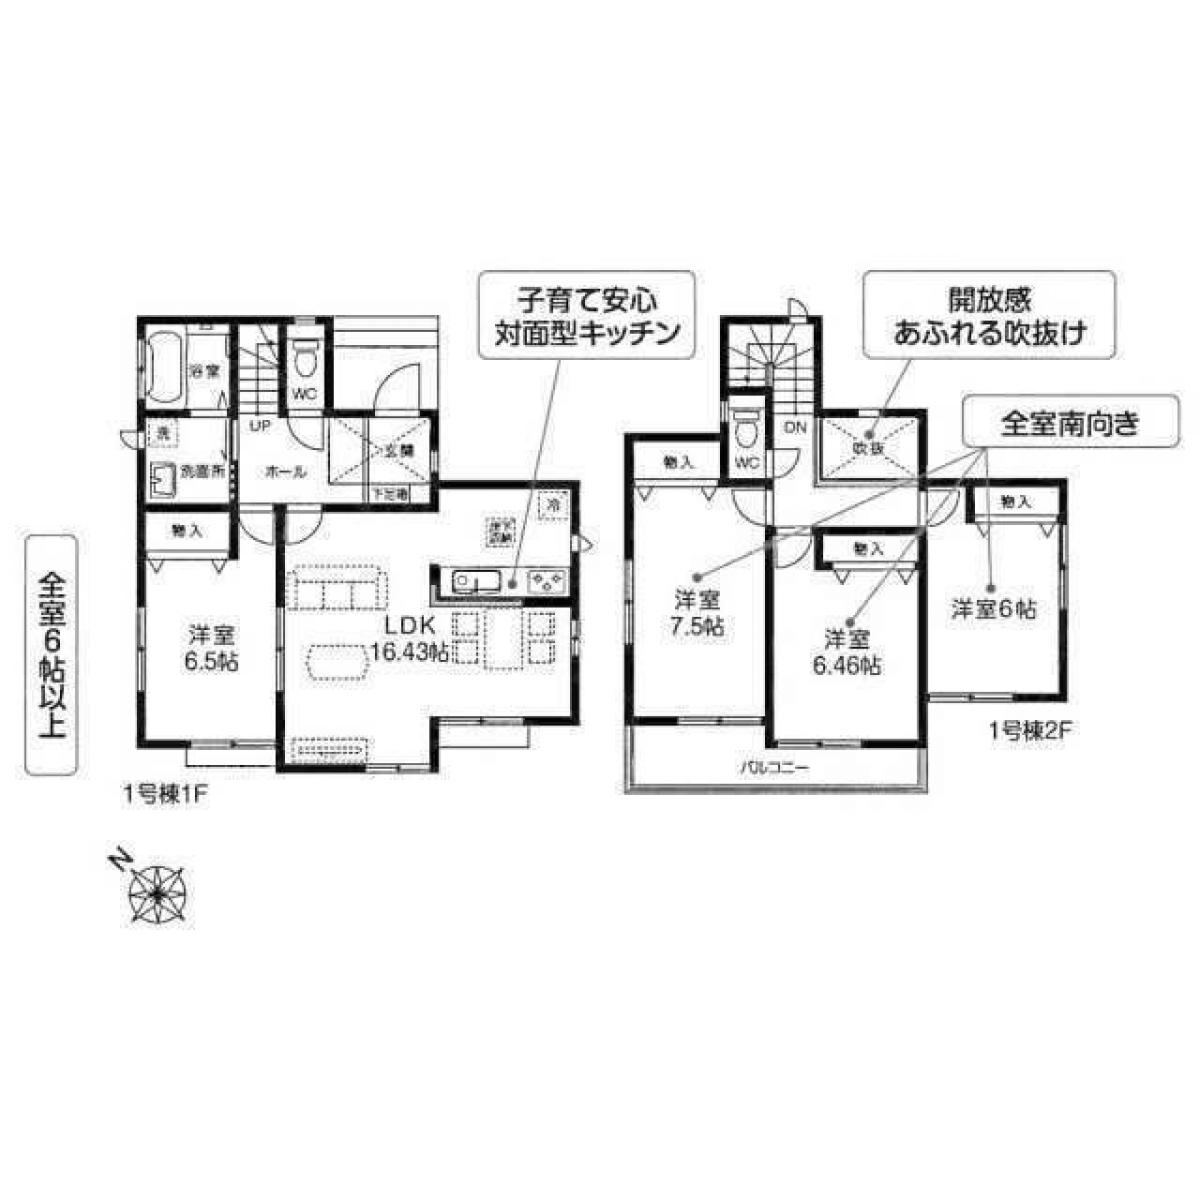 Picture of Home For Sale in Konosu Shi, Saitama, Japan